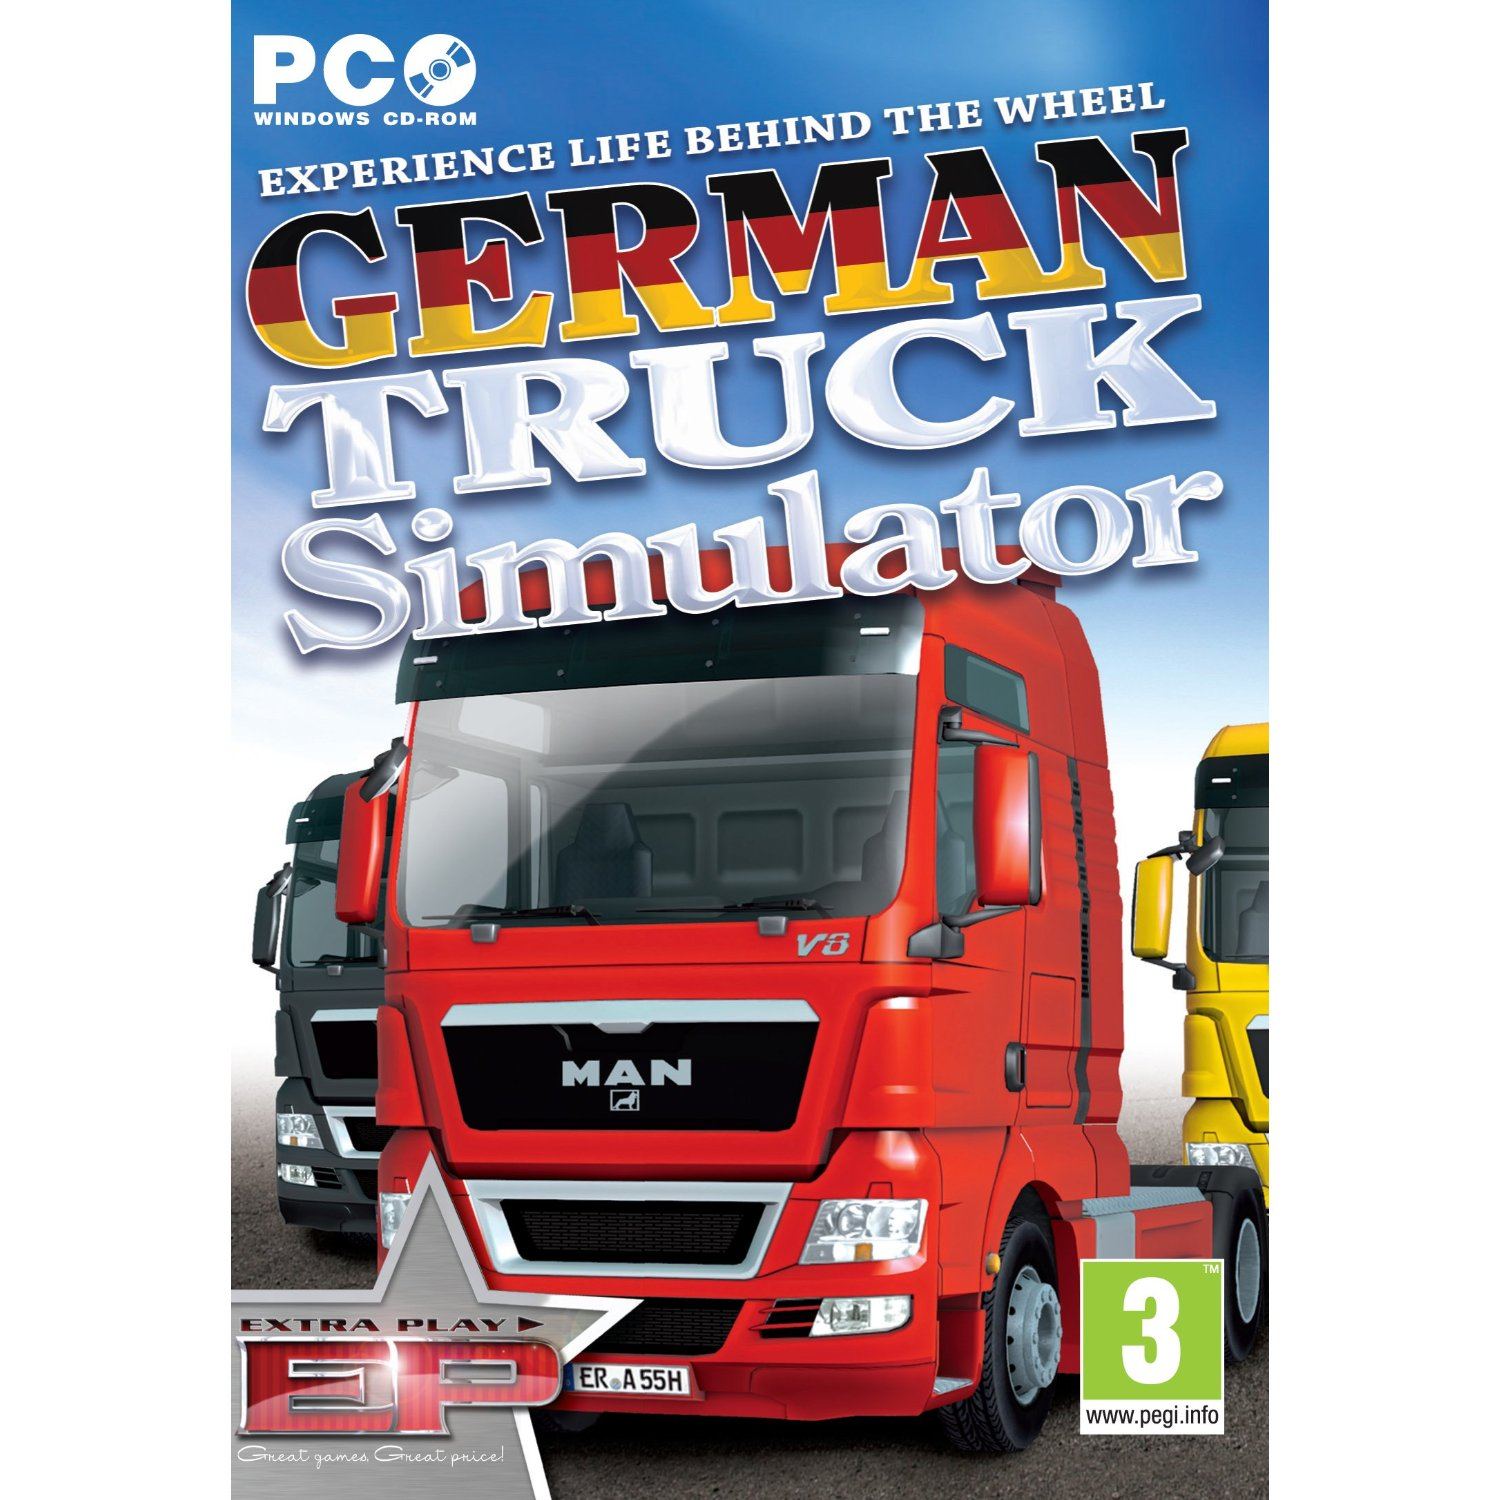 German Truck Simulator for Windows